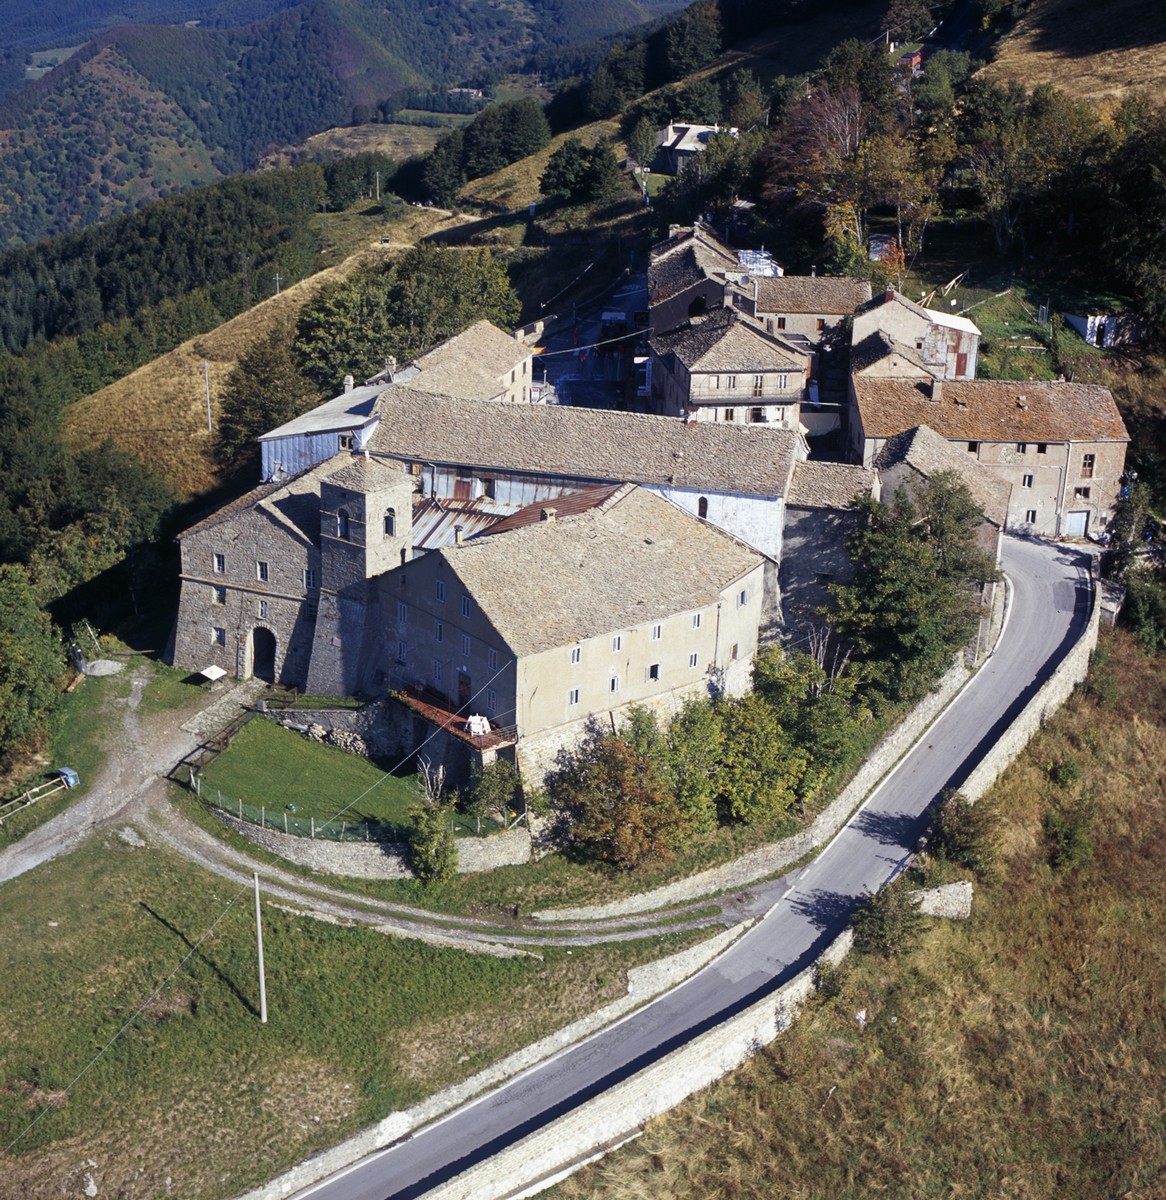 San Pellegrino in Alpe